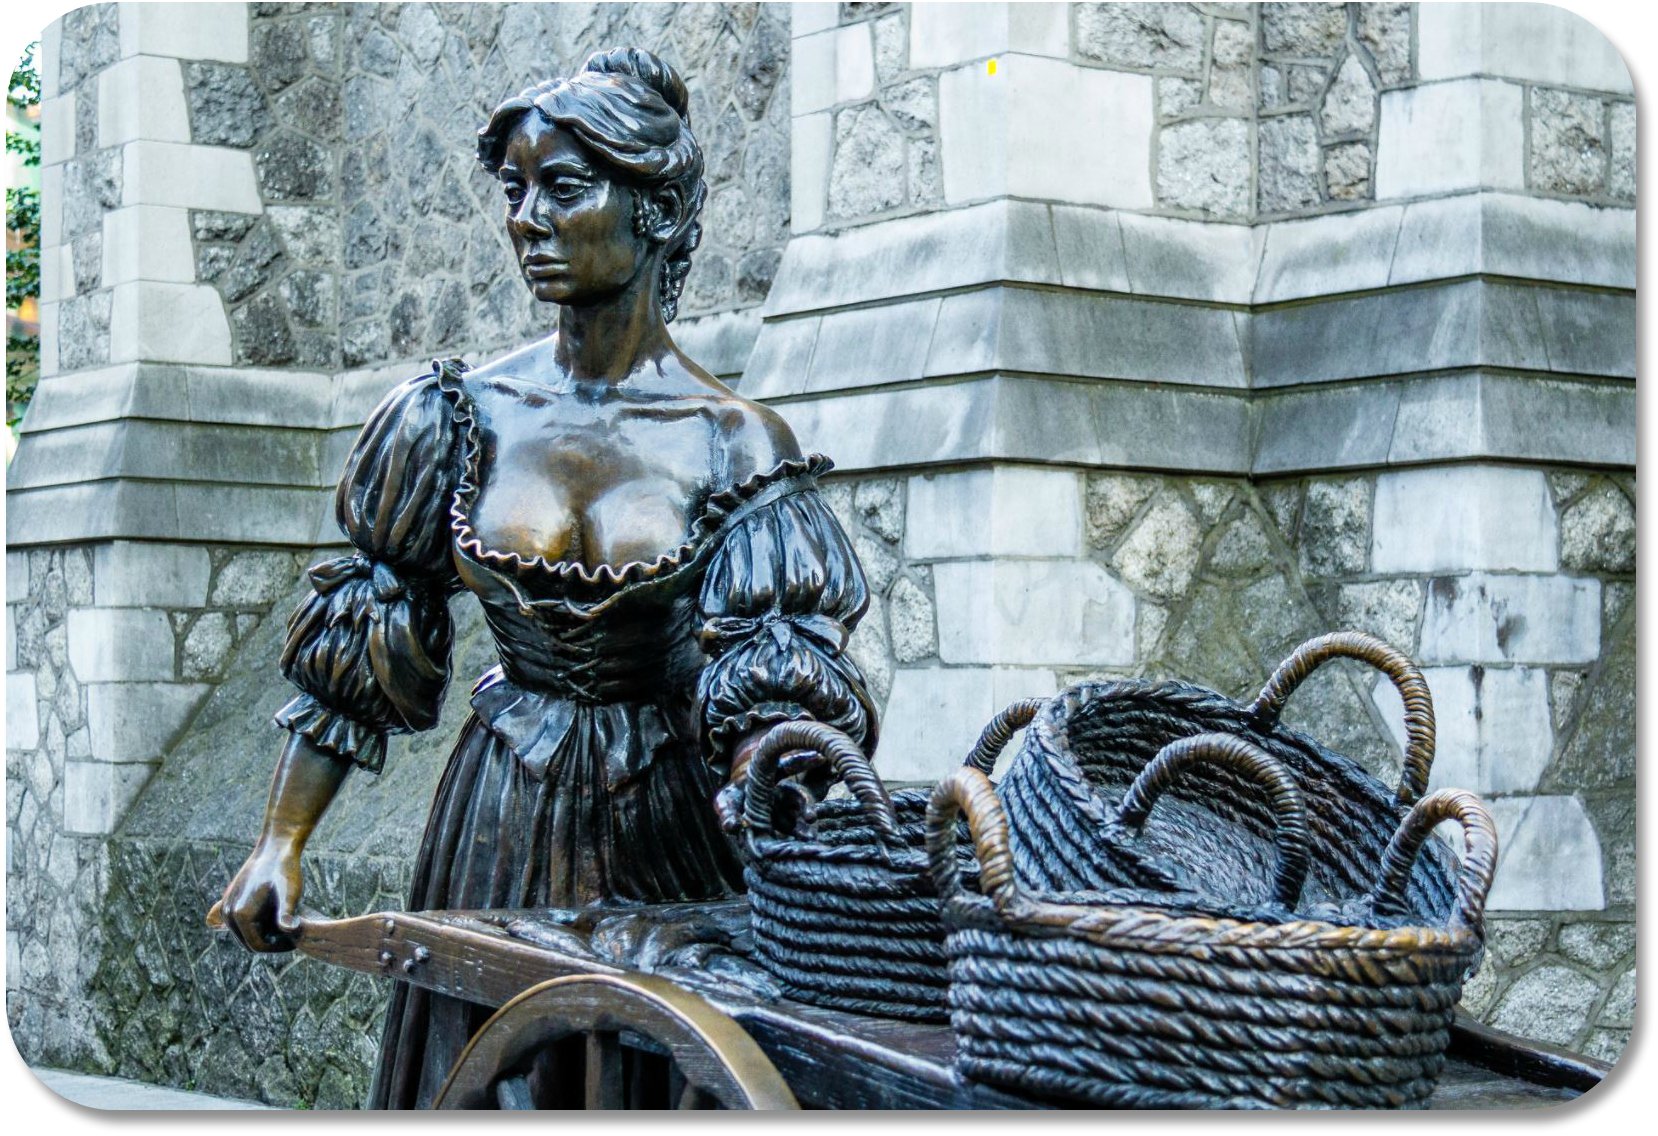 Irish Expressions.  Irish Song Lyrics.  Image of the Molly Malone statue in Dublin courtesy of Bigstock.